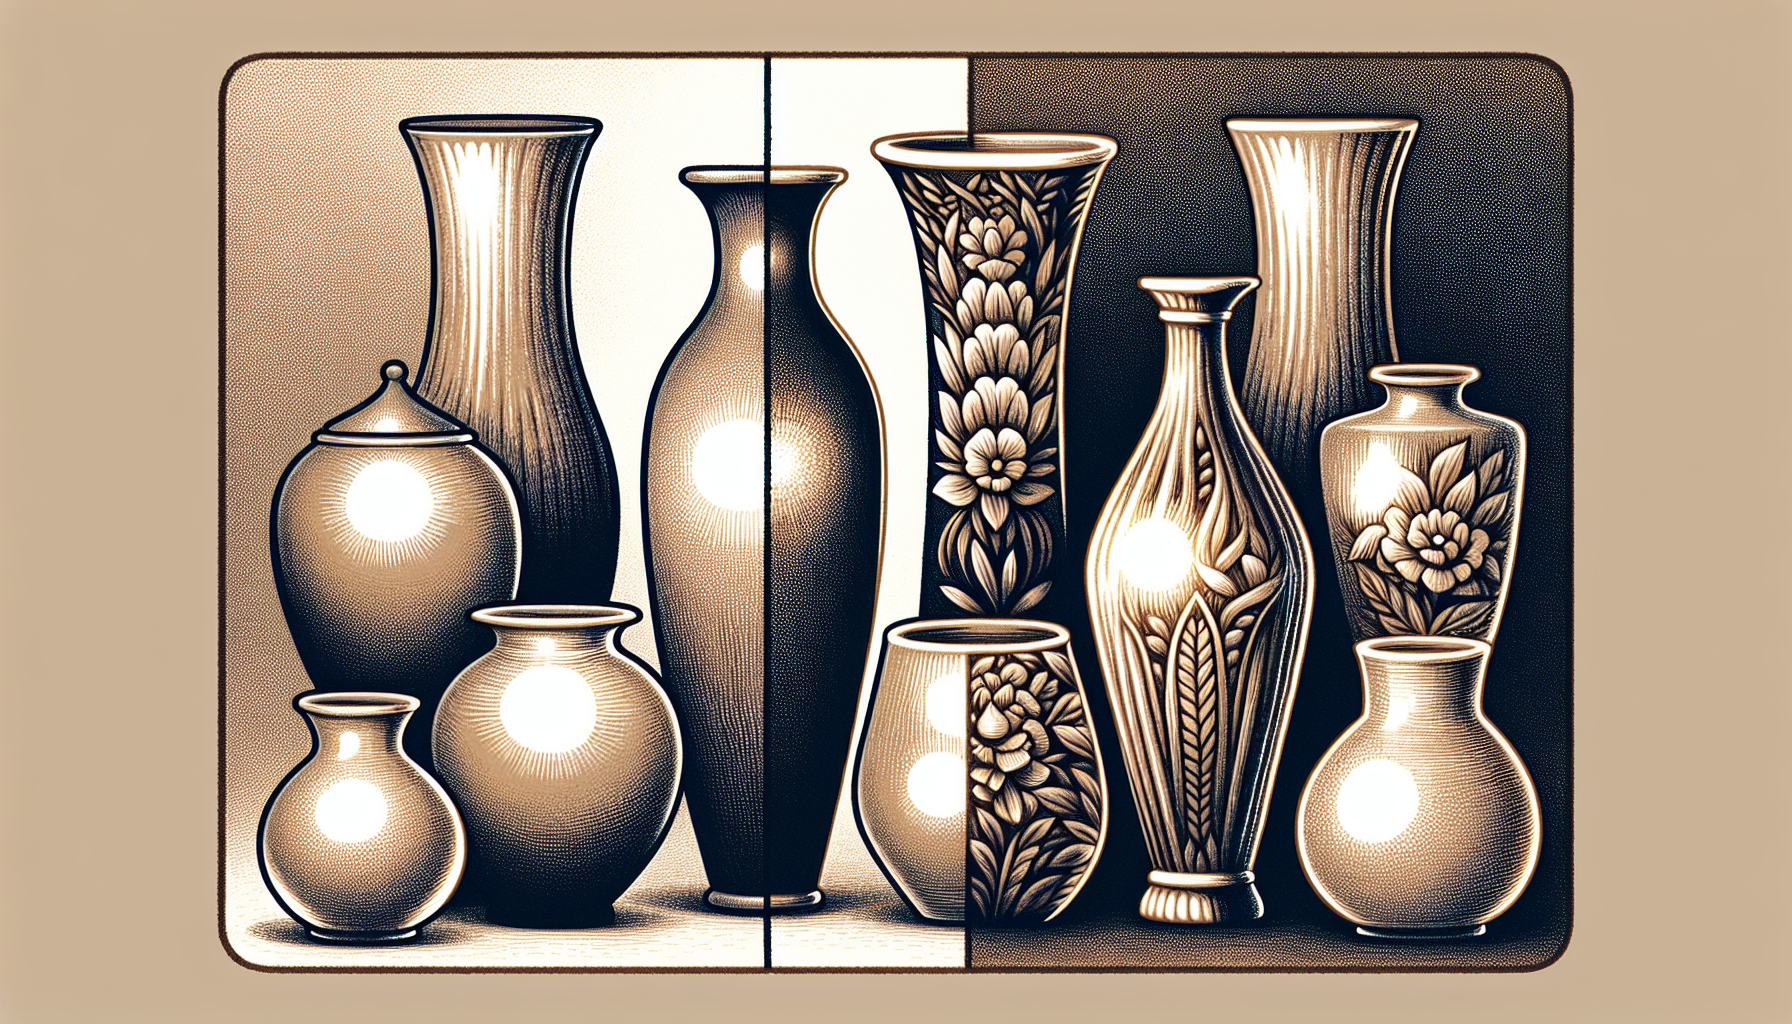 Comparison of glazed and unglazed ceramic and porcelain vases